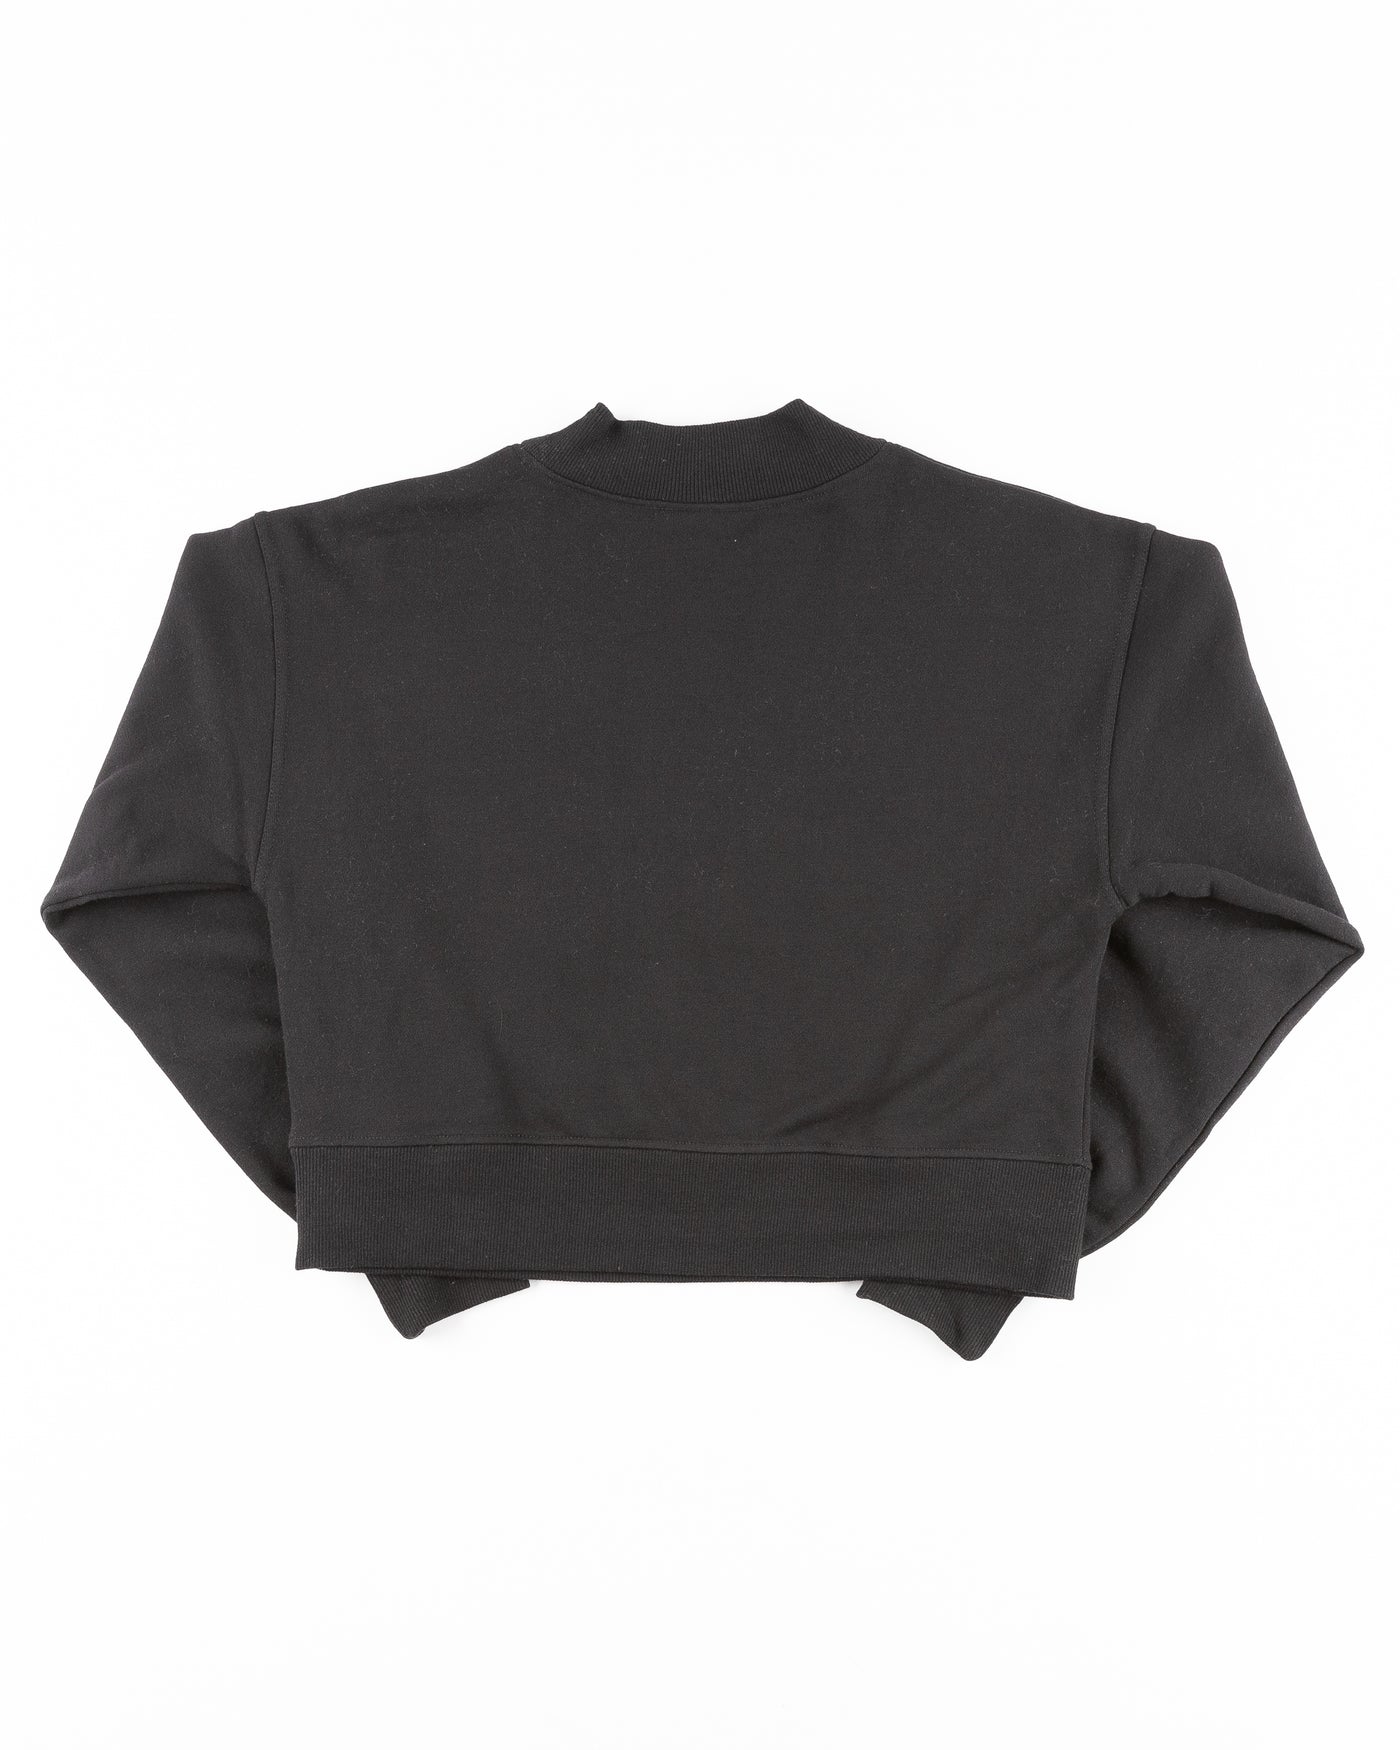 black cropped mock neck sweater with Chicago Blackhawks wordmark - back lay flat